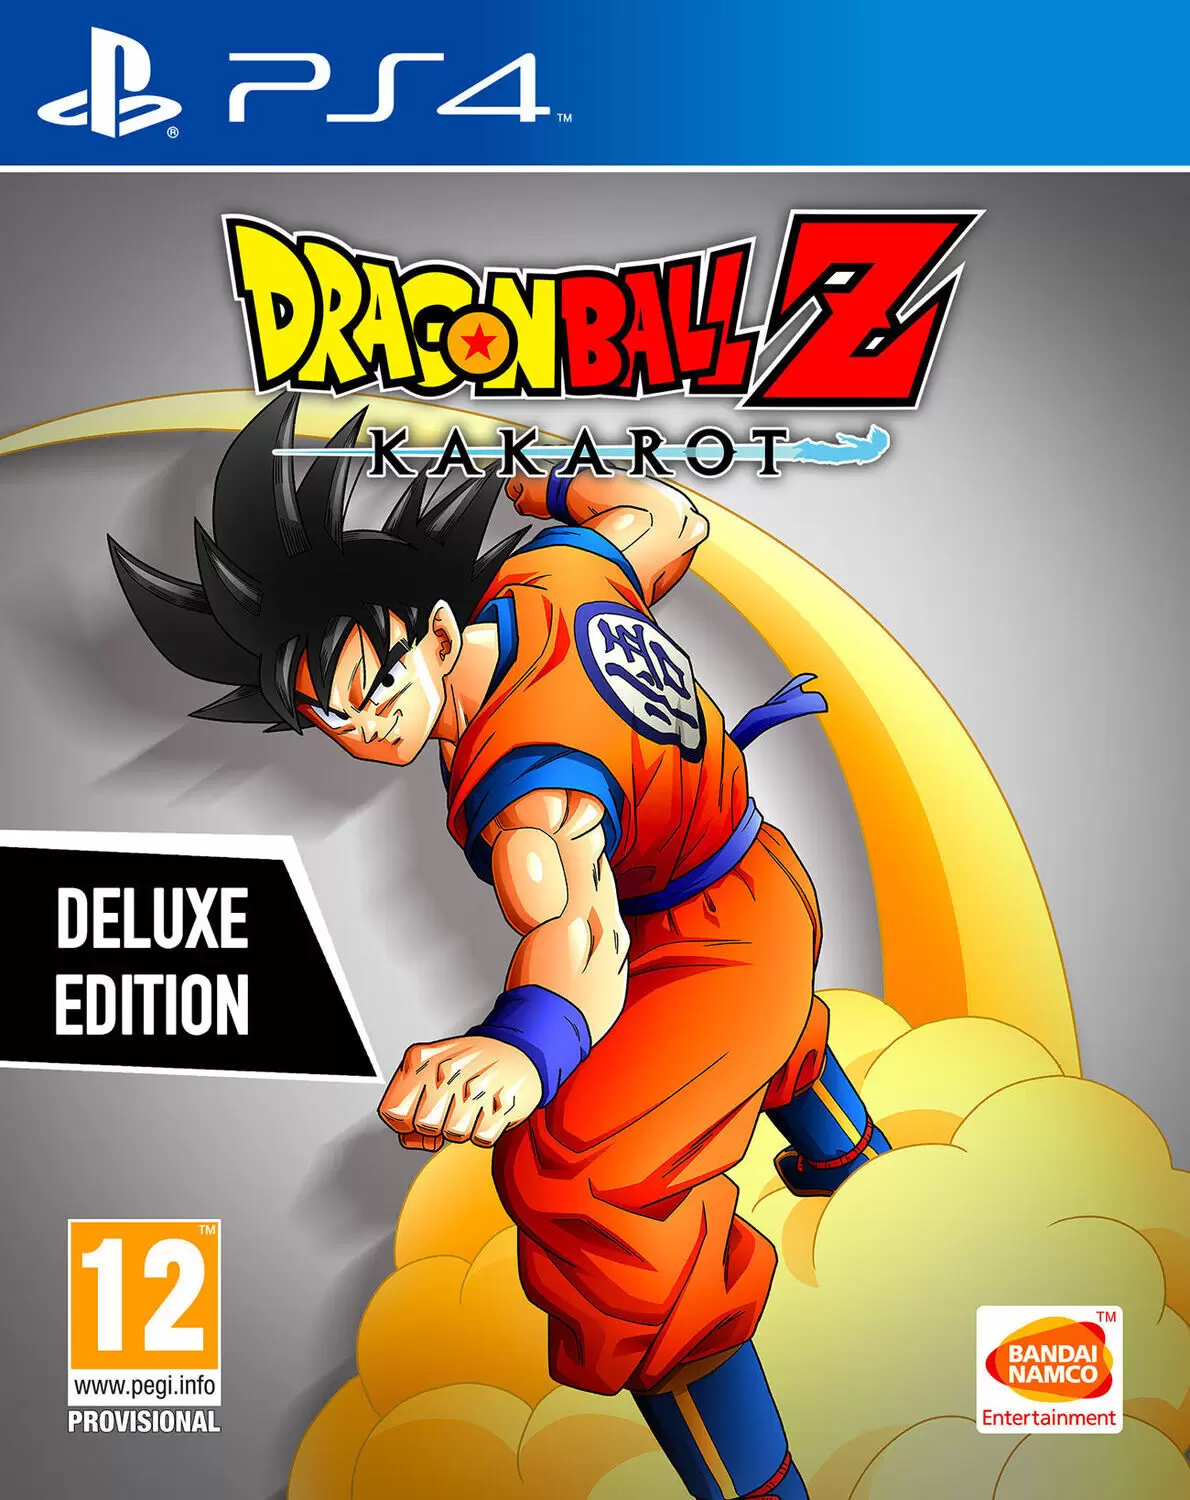 PS4 Games - Dragon Ball Z Kakarot Edition Deluxe